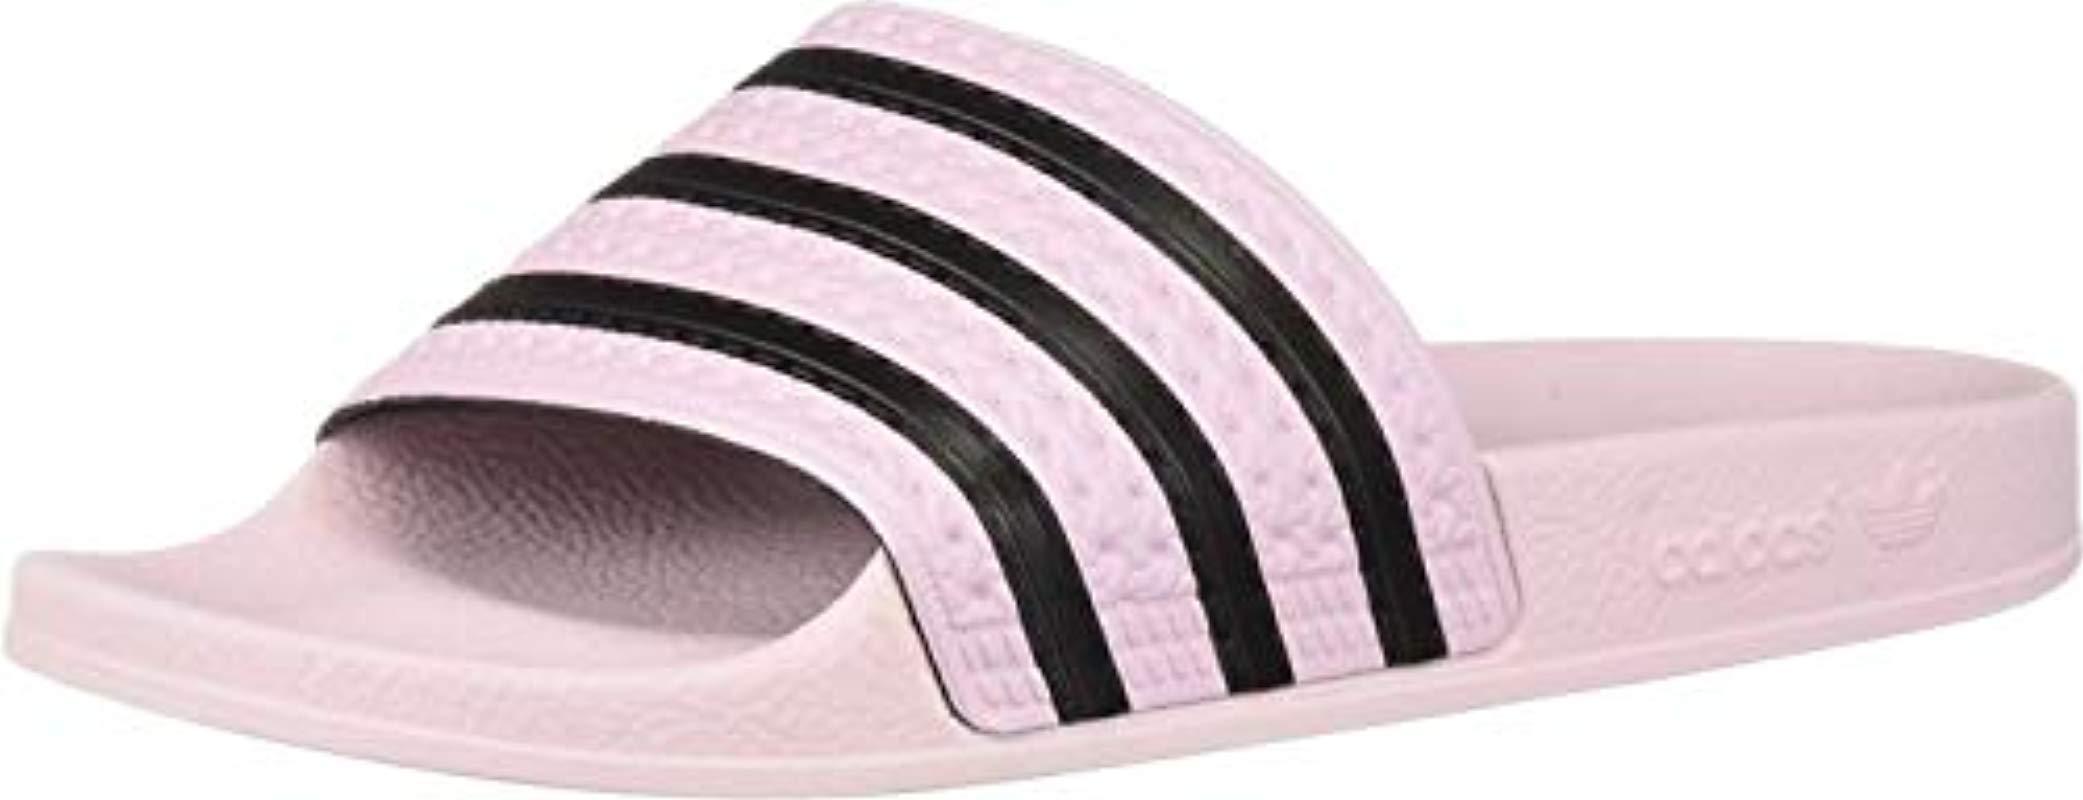 adidas slides pink and black